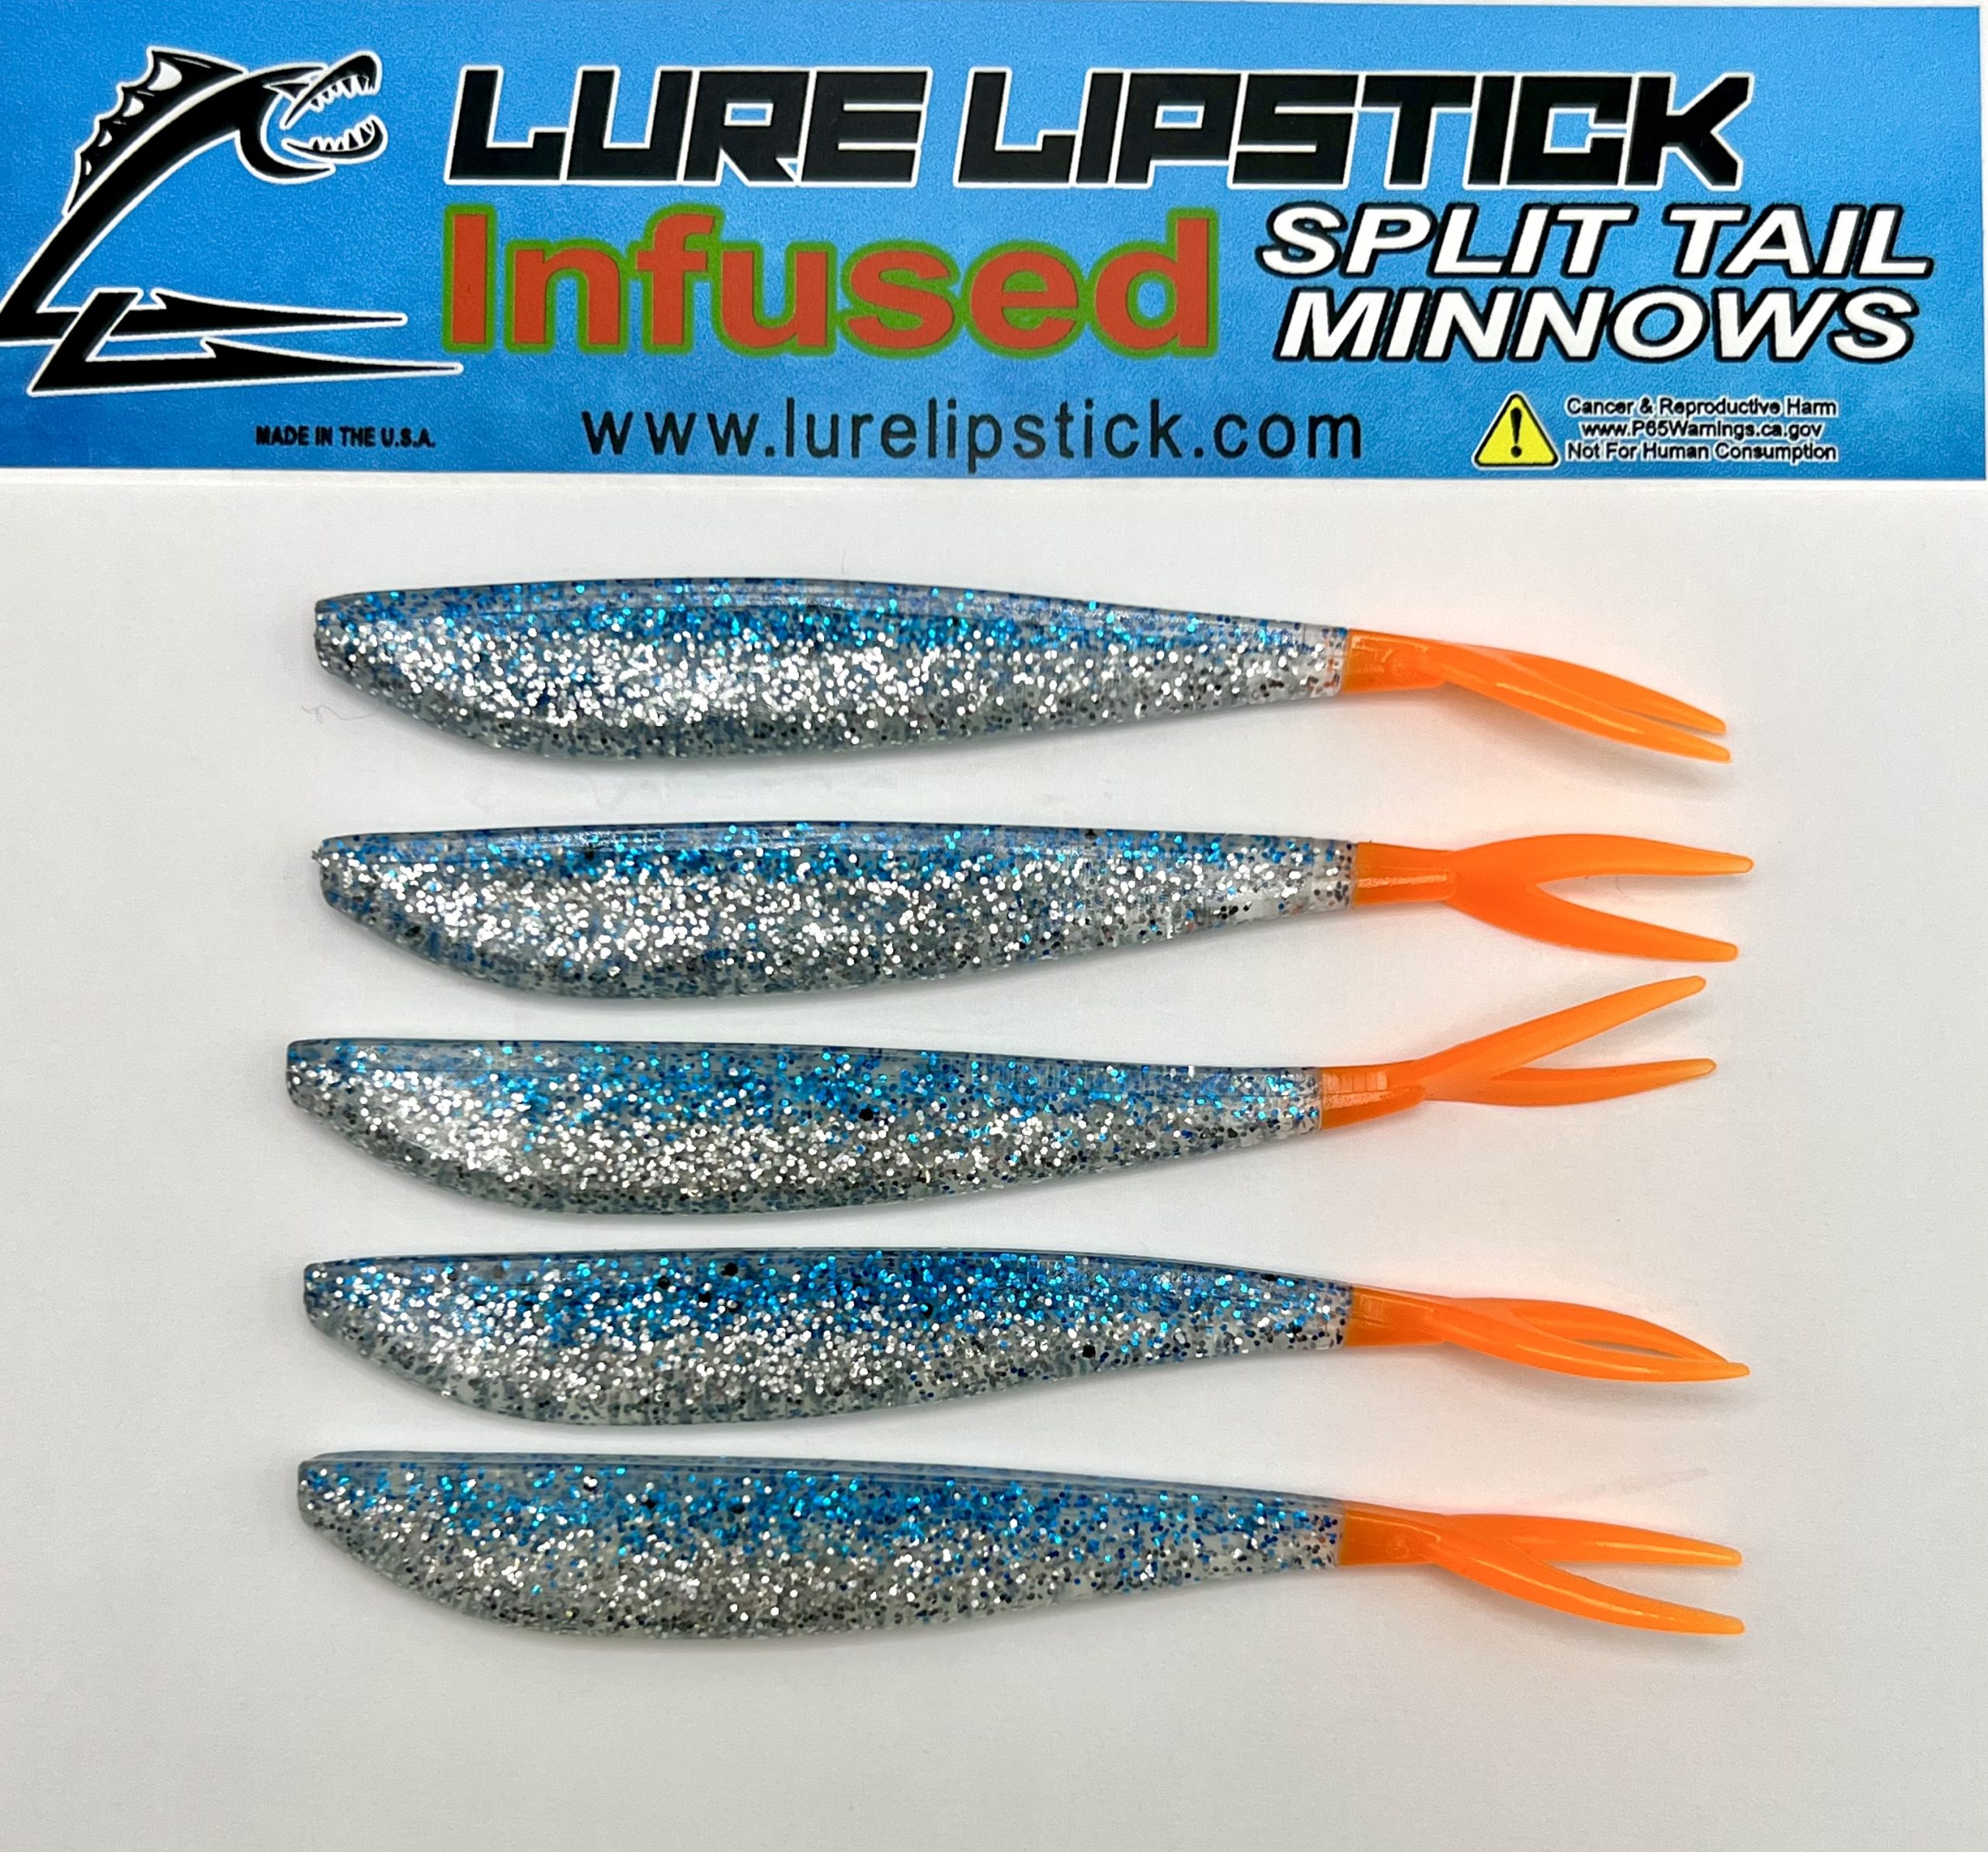 4in 5 Pack Custom Split Tail Minnows - Blue Ice Orange Tail